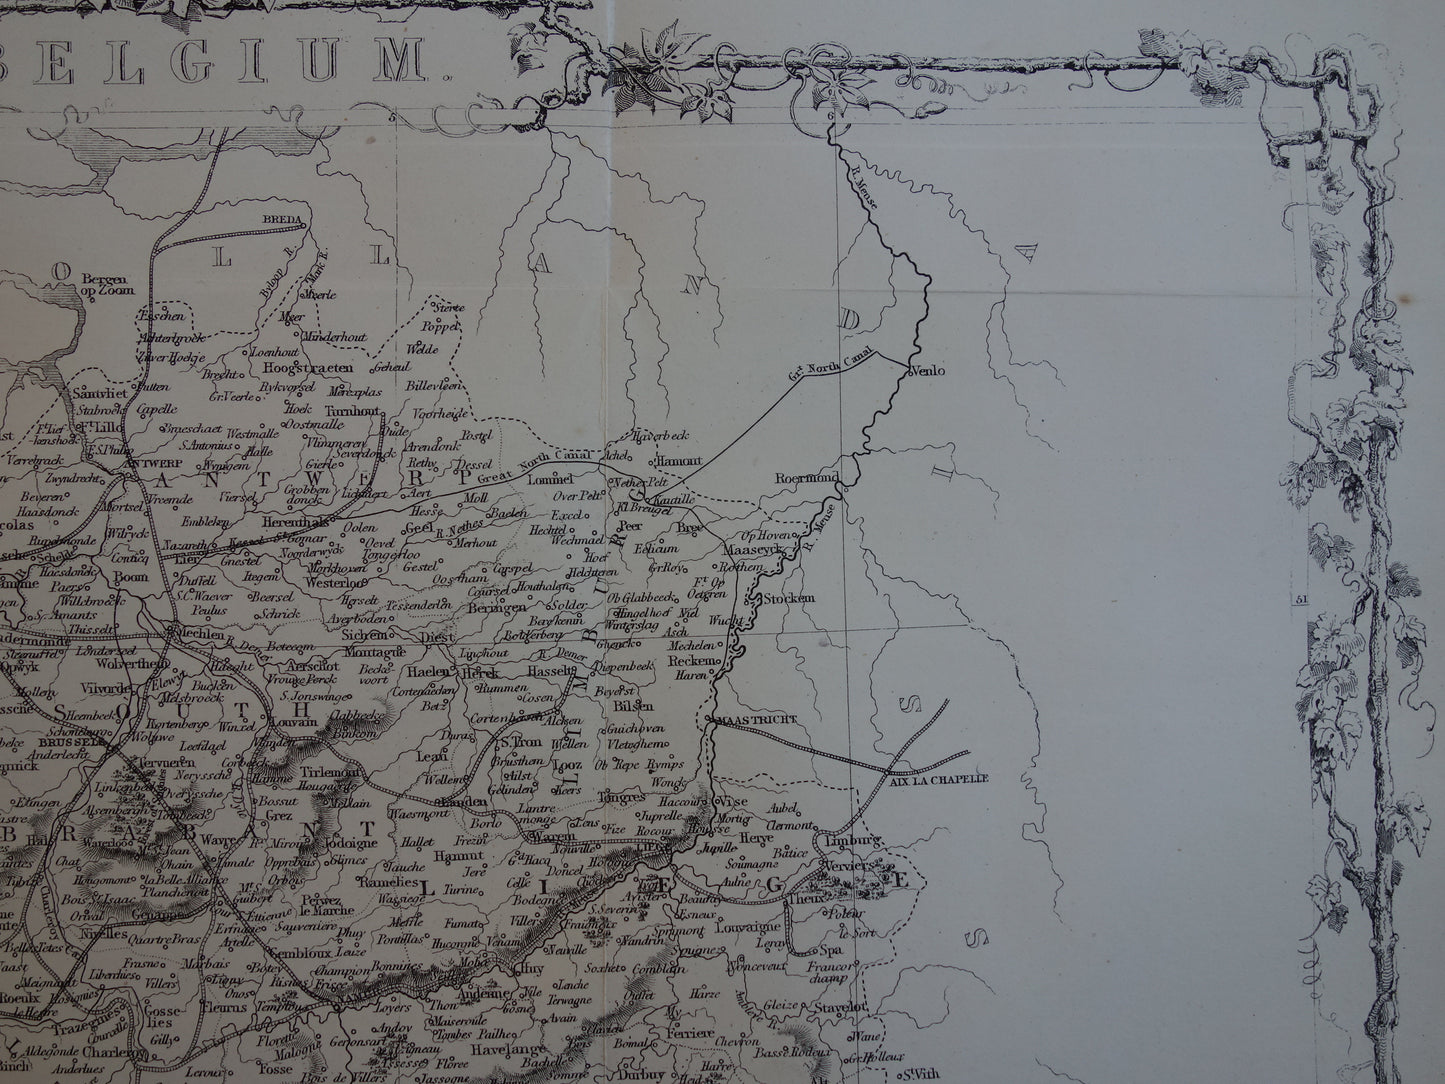 België oude kaart uit 1860 originele antieke landkaart Belgium John Rapkin - Vintage Engelse kaarten België